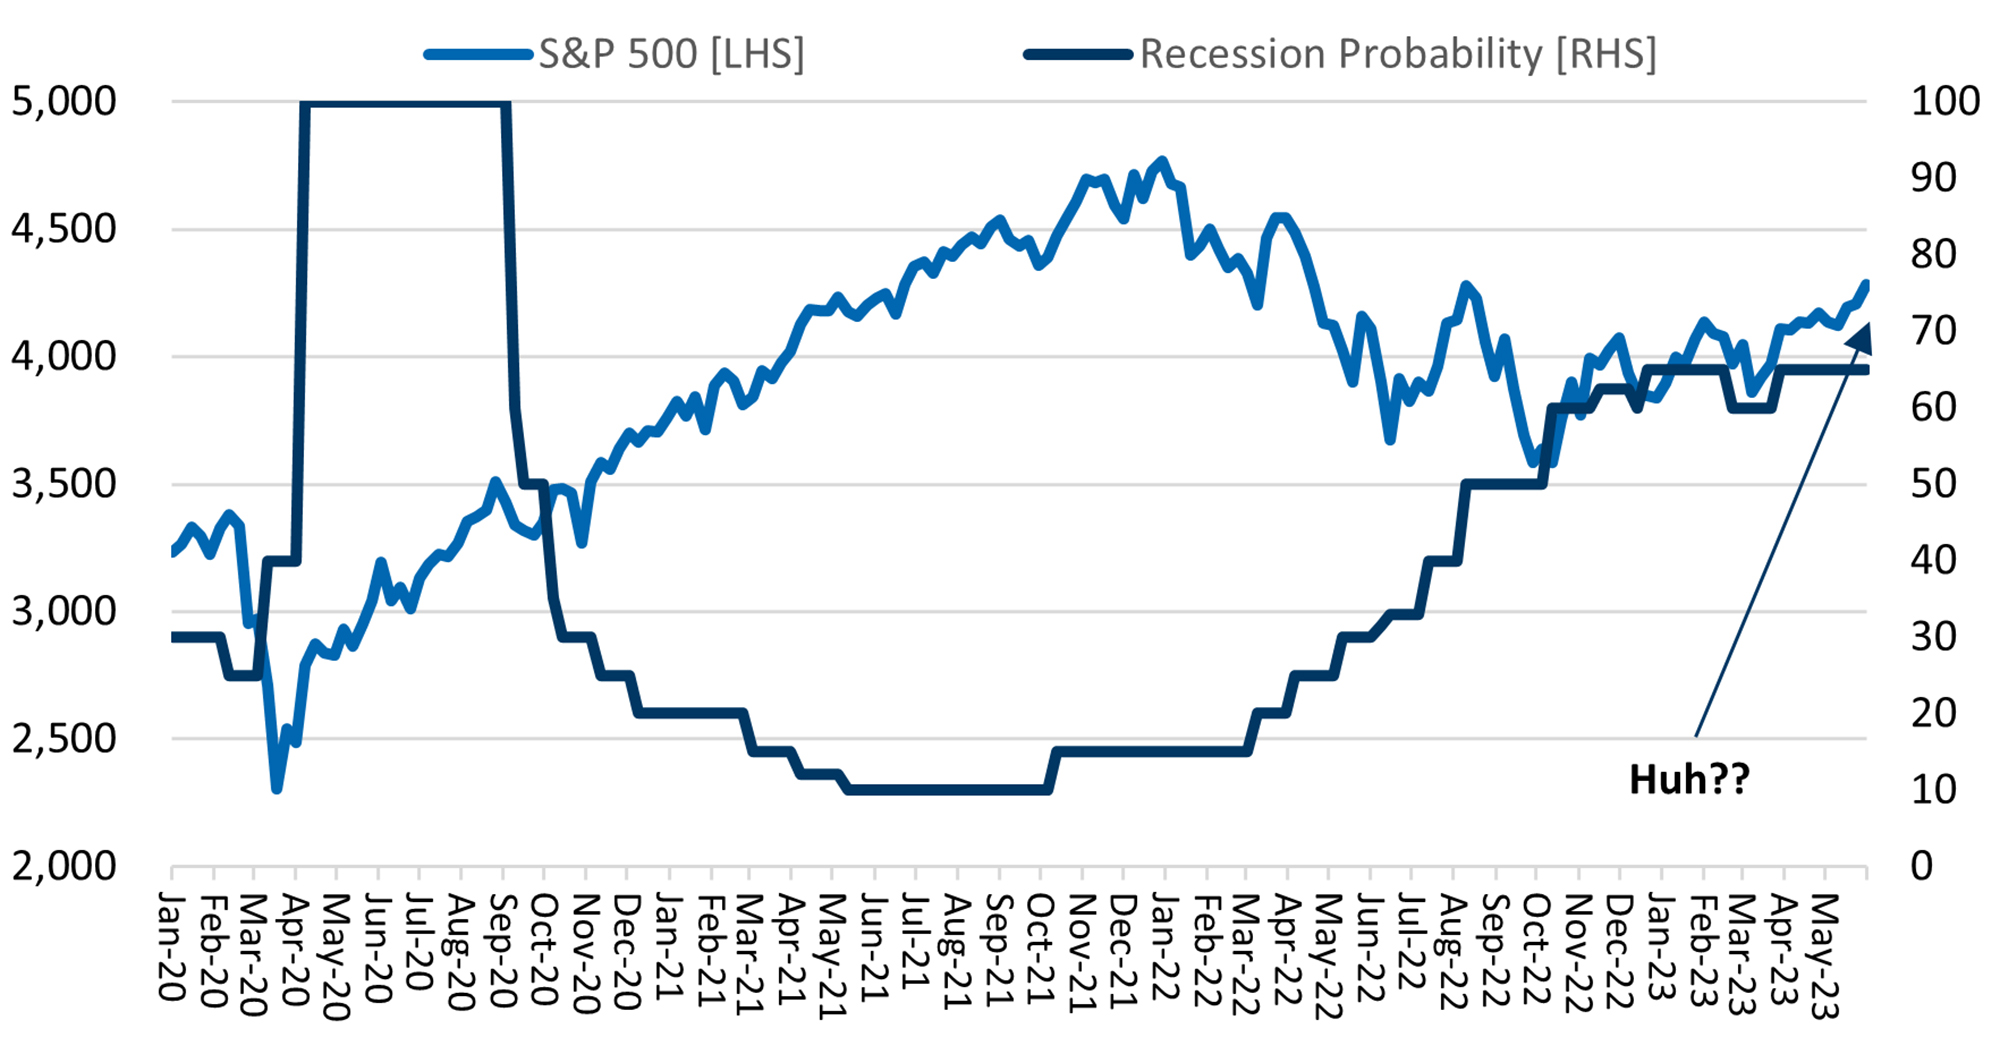 Figure 1: Recession Probability vs. S&P 500 Index